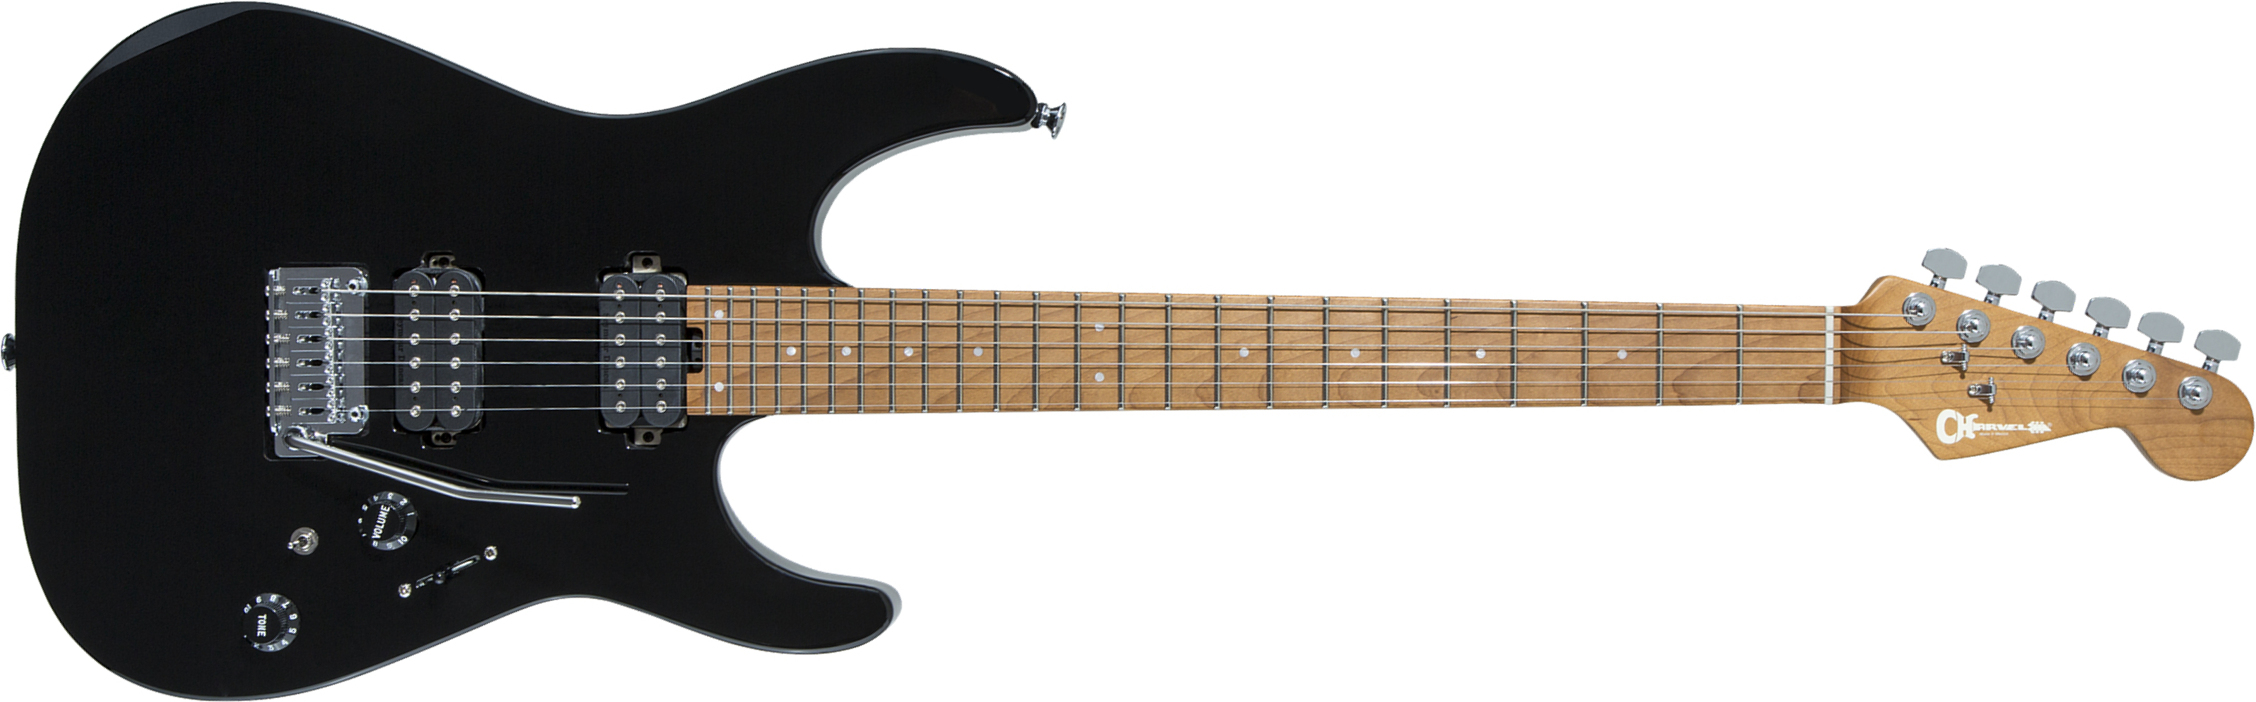 Charvel Pro-mod Dk24 Hh 2pt Cm Seymour Duncan Trem Mn - Black - E-Gitarre in Str-Form - Main picture